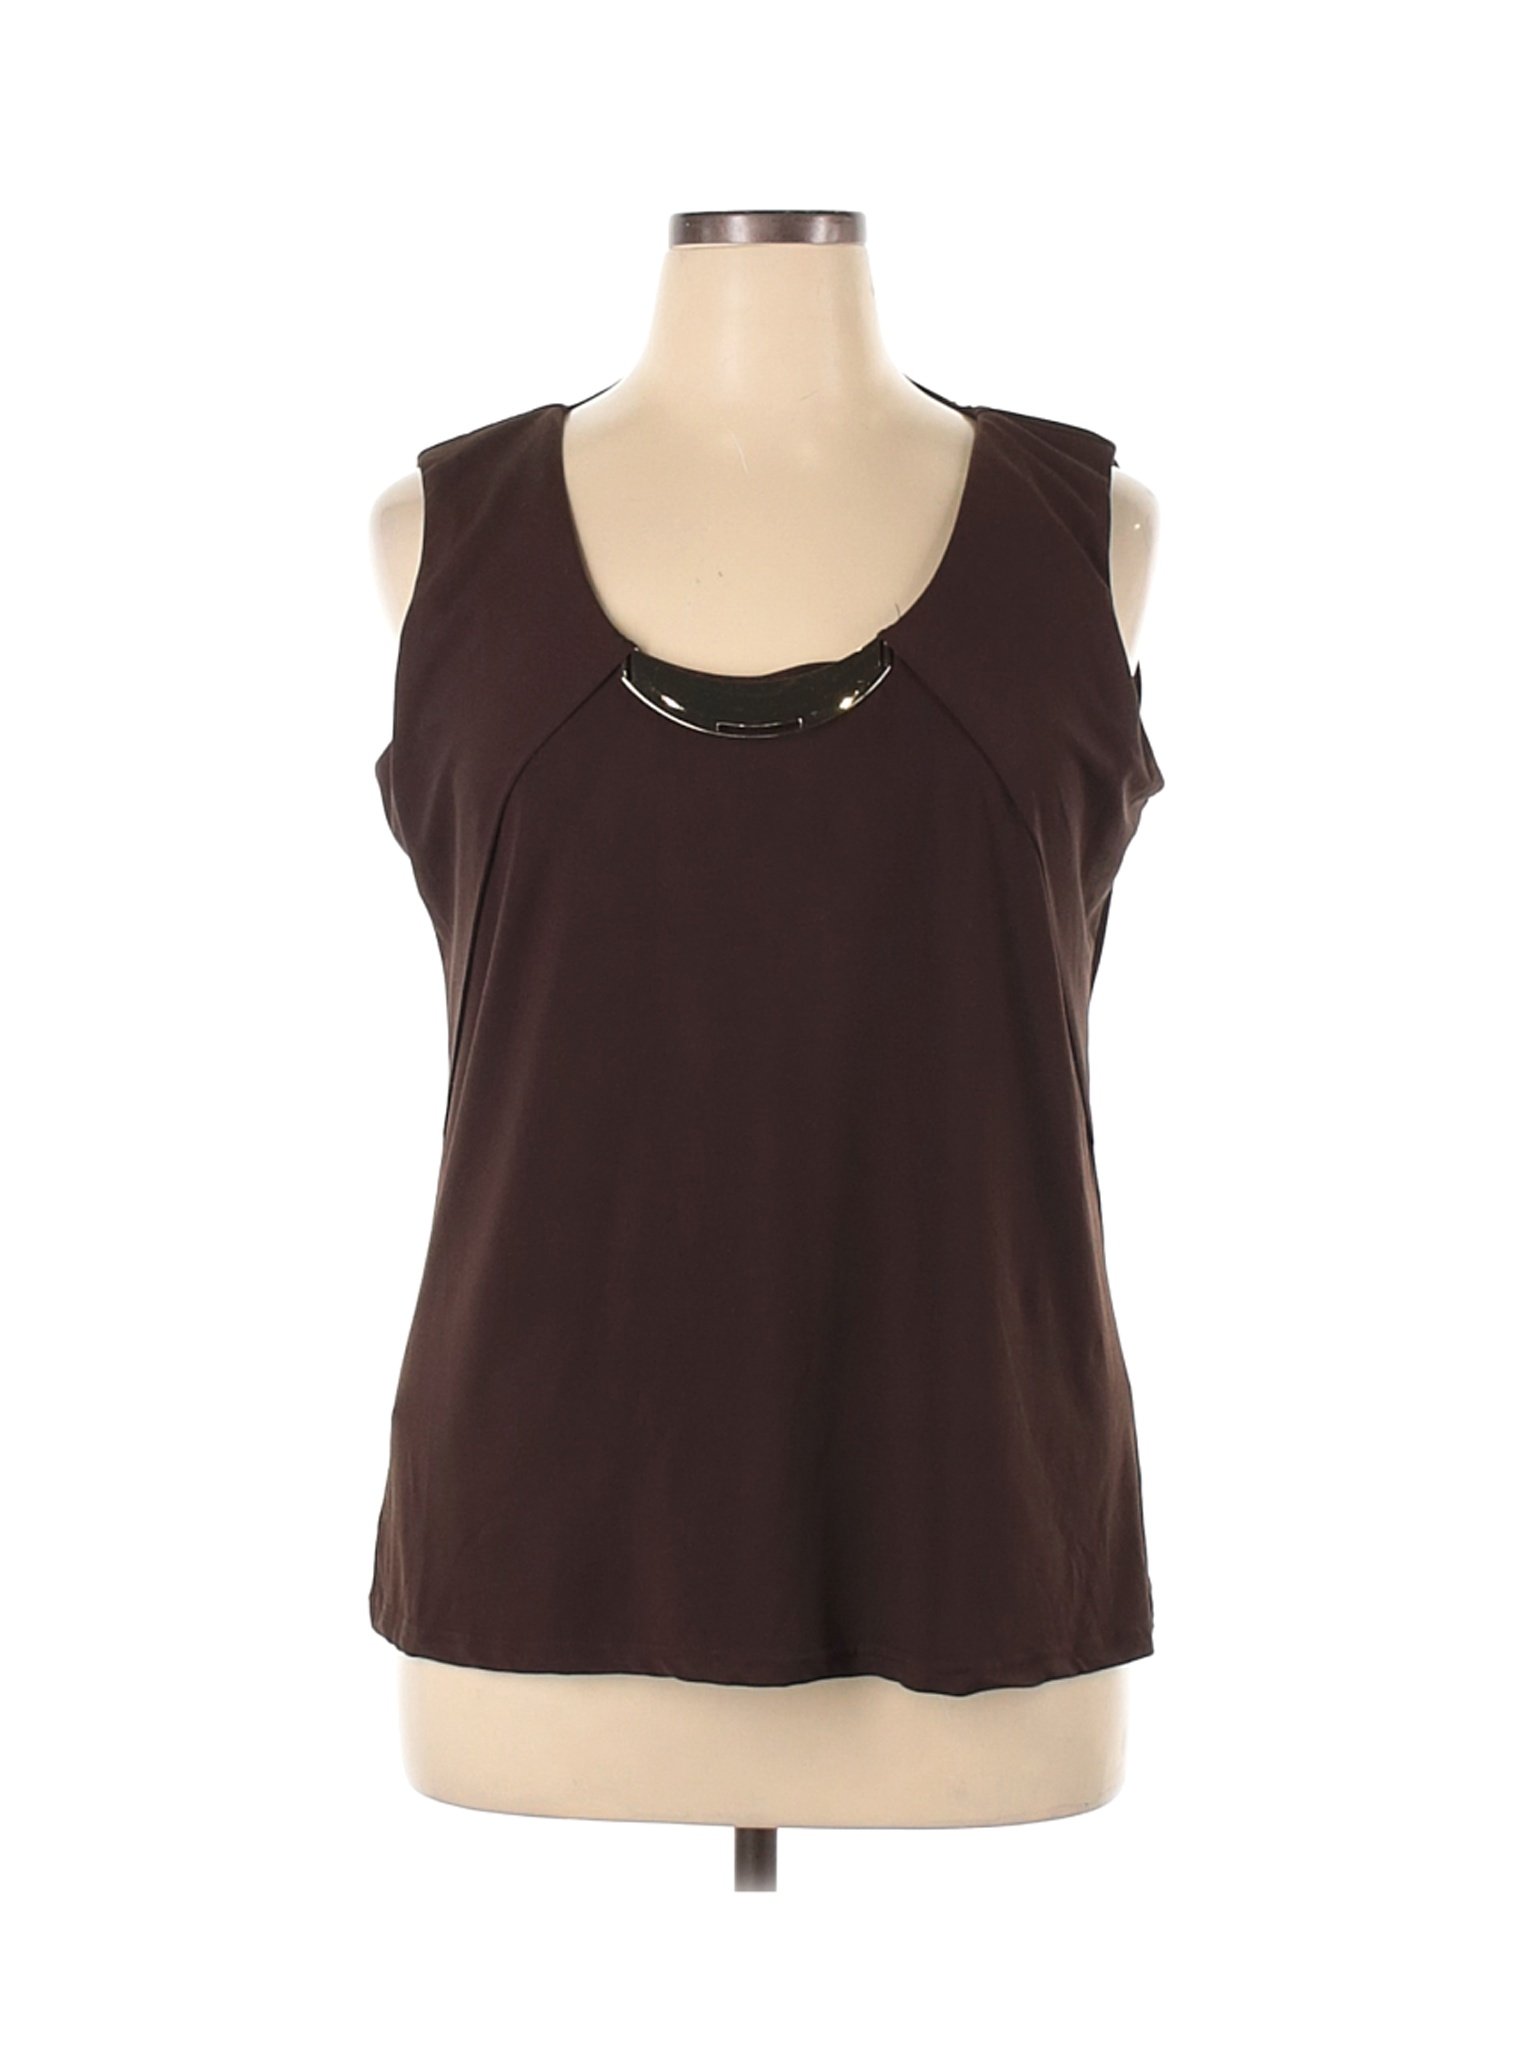 Cato Women Brown Sleeveless Blouse 1X Plus | eBay